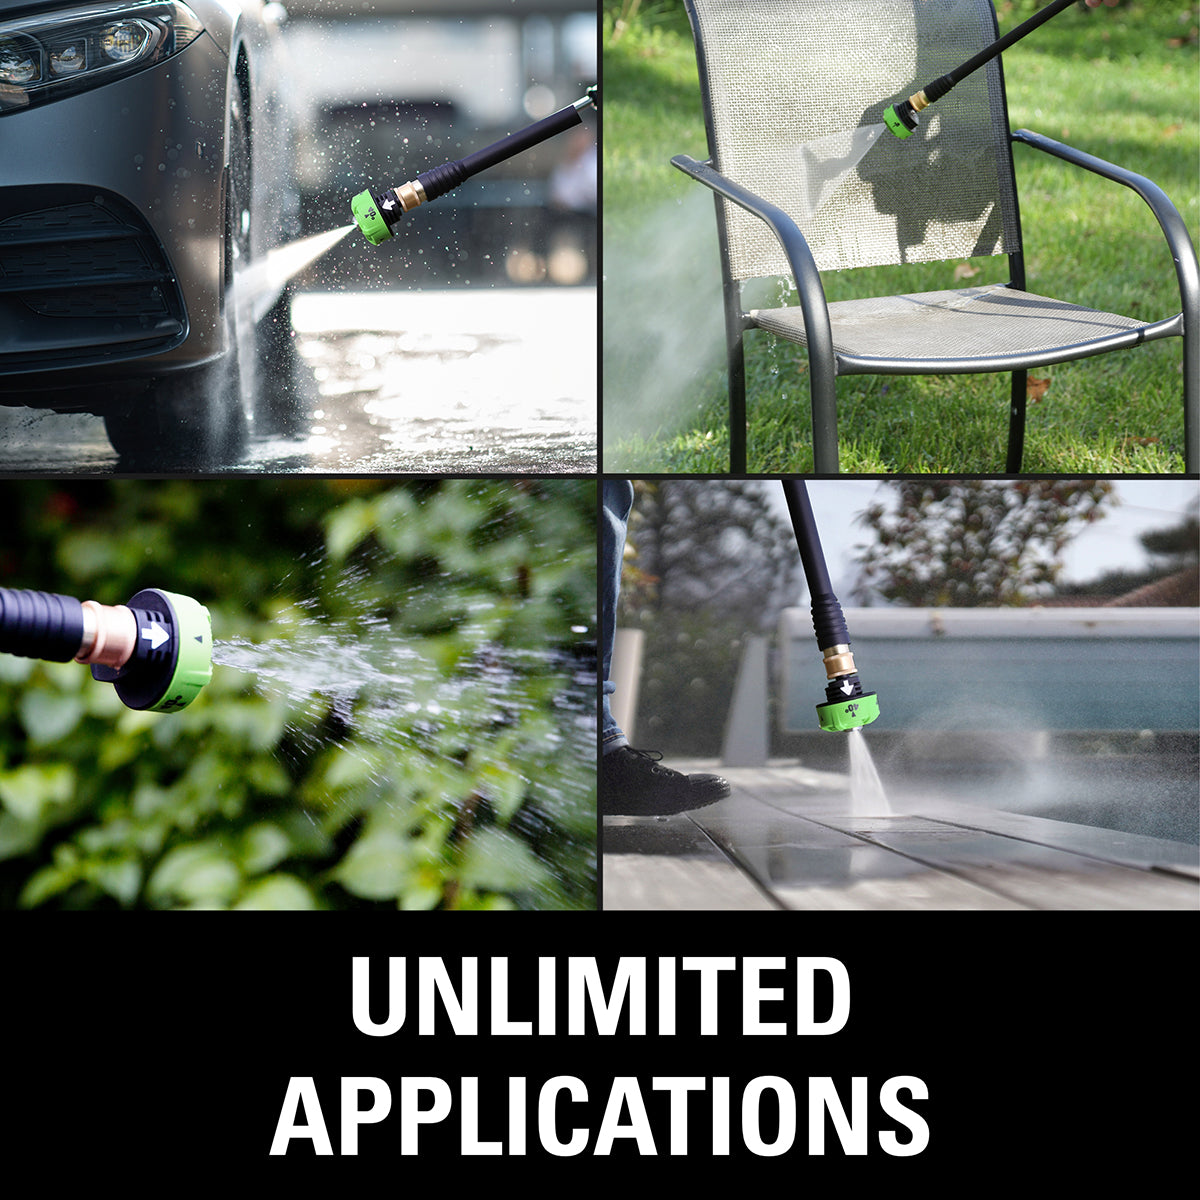 Cordless Electric High Pressure Water Spray Car Gun Portable Washer Cleaner Yard Garden